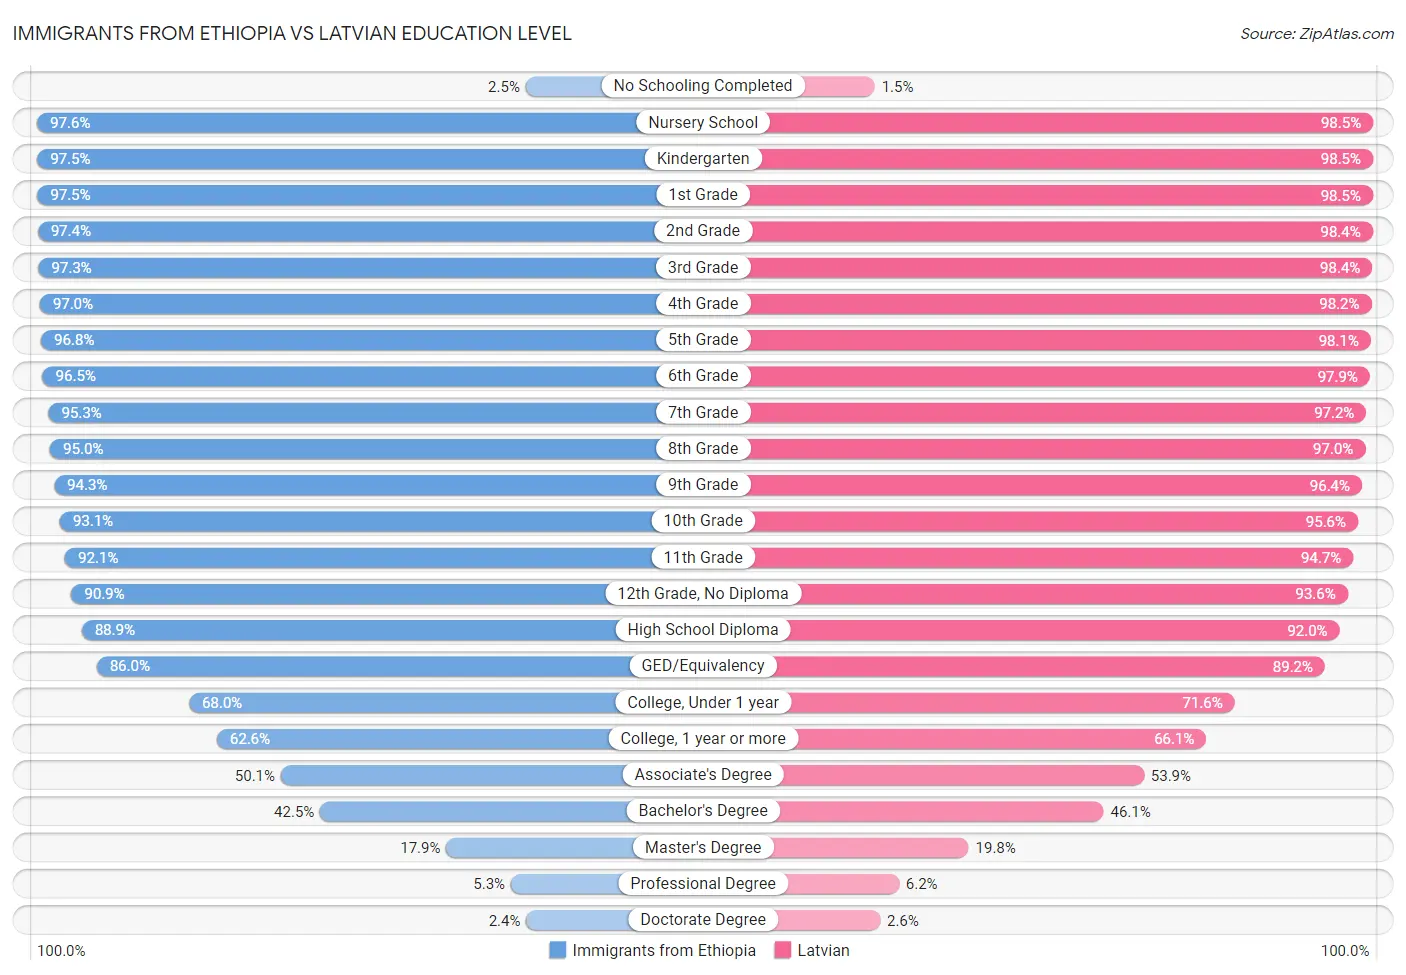 Immigrants from Ethiopia vs Latvian Education Level